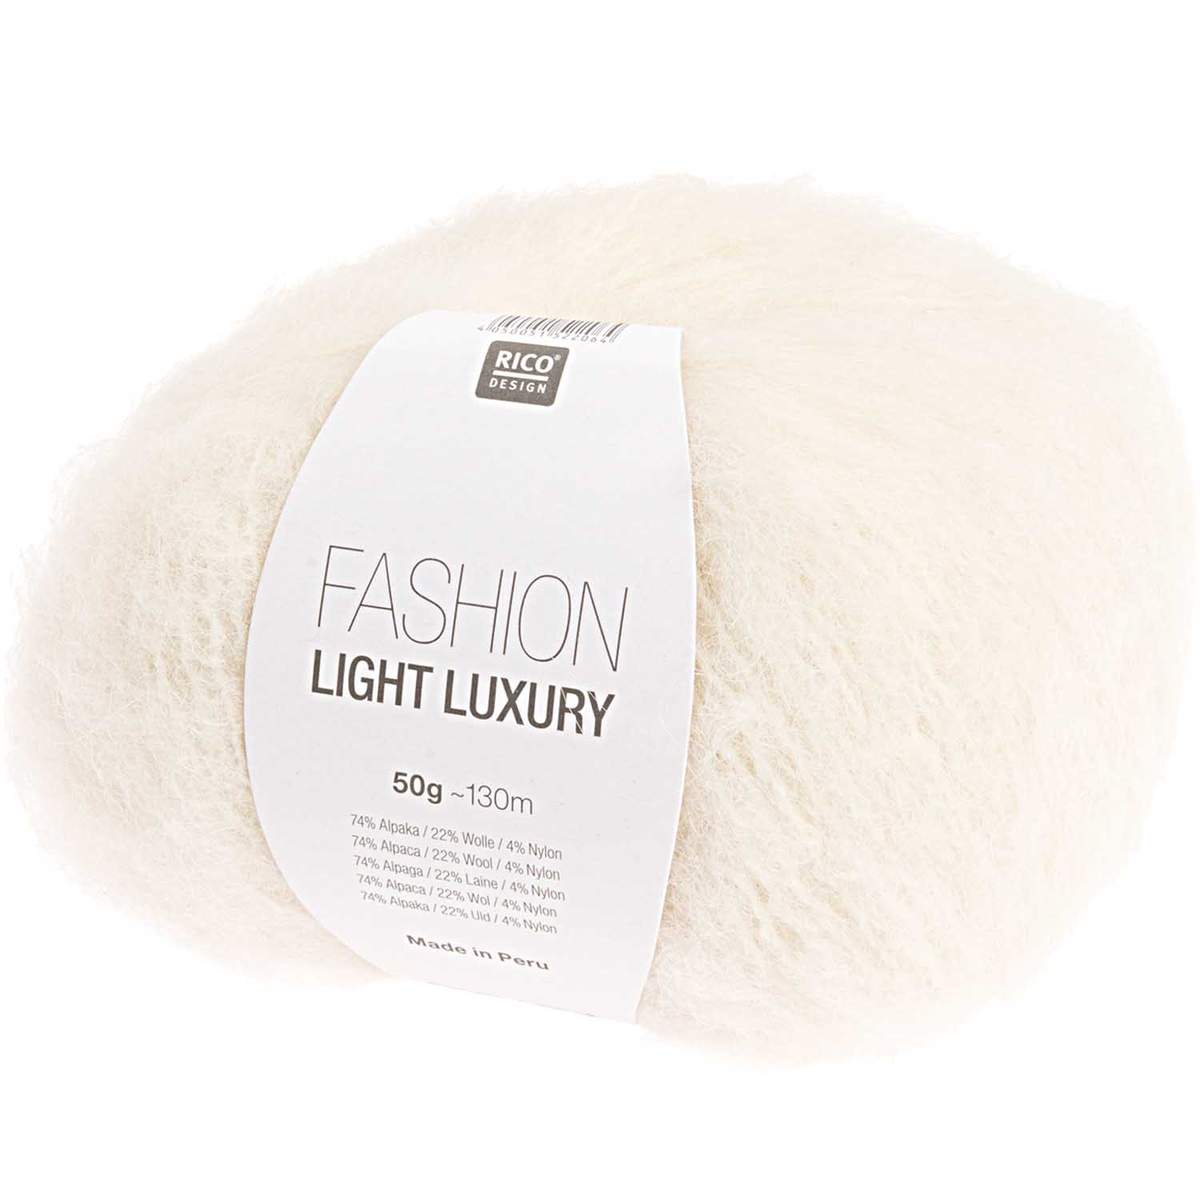 Fashion Light Luxury | Rico Design